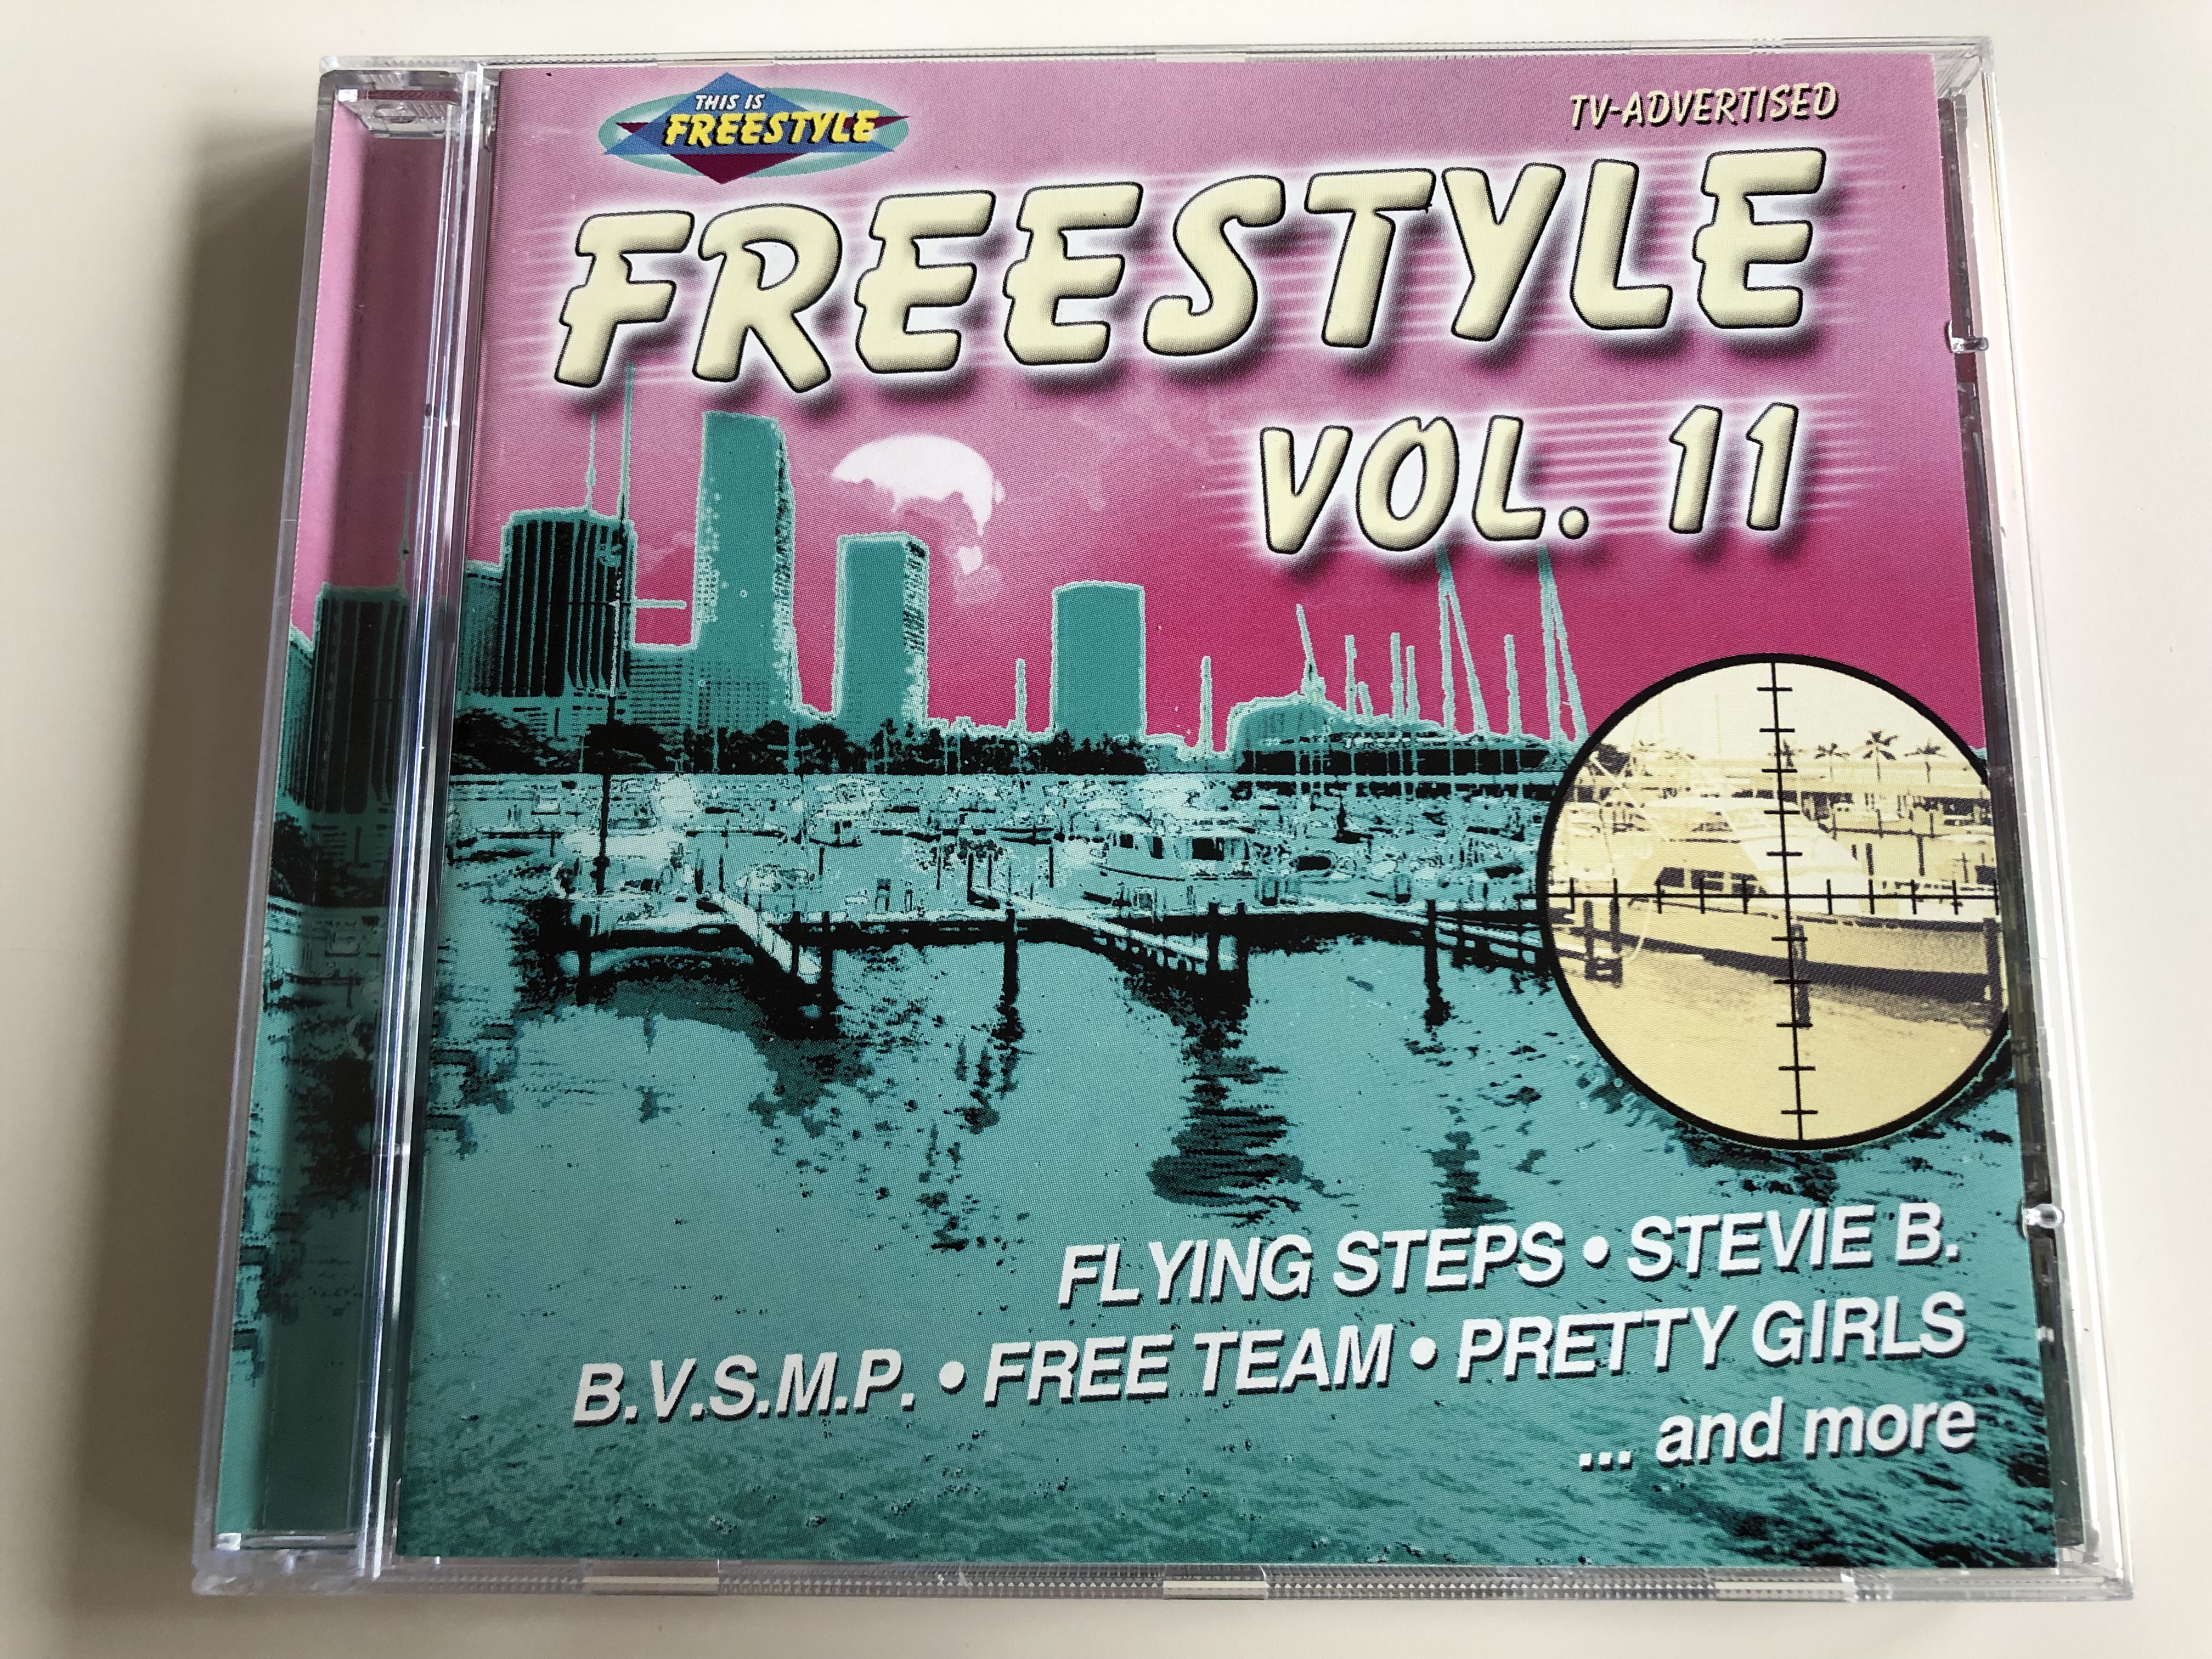 freestyle-vol.-11-flying-steps-stevie-b.-b.-v.-s.-m.-p.-free-team-pretty-girls-...-and-more-zyx-music-audio-cd-2000-zyx-55188-2-1-.jpg